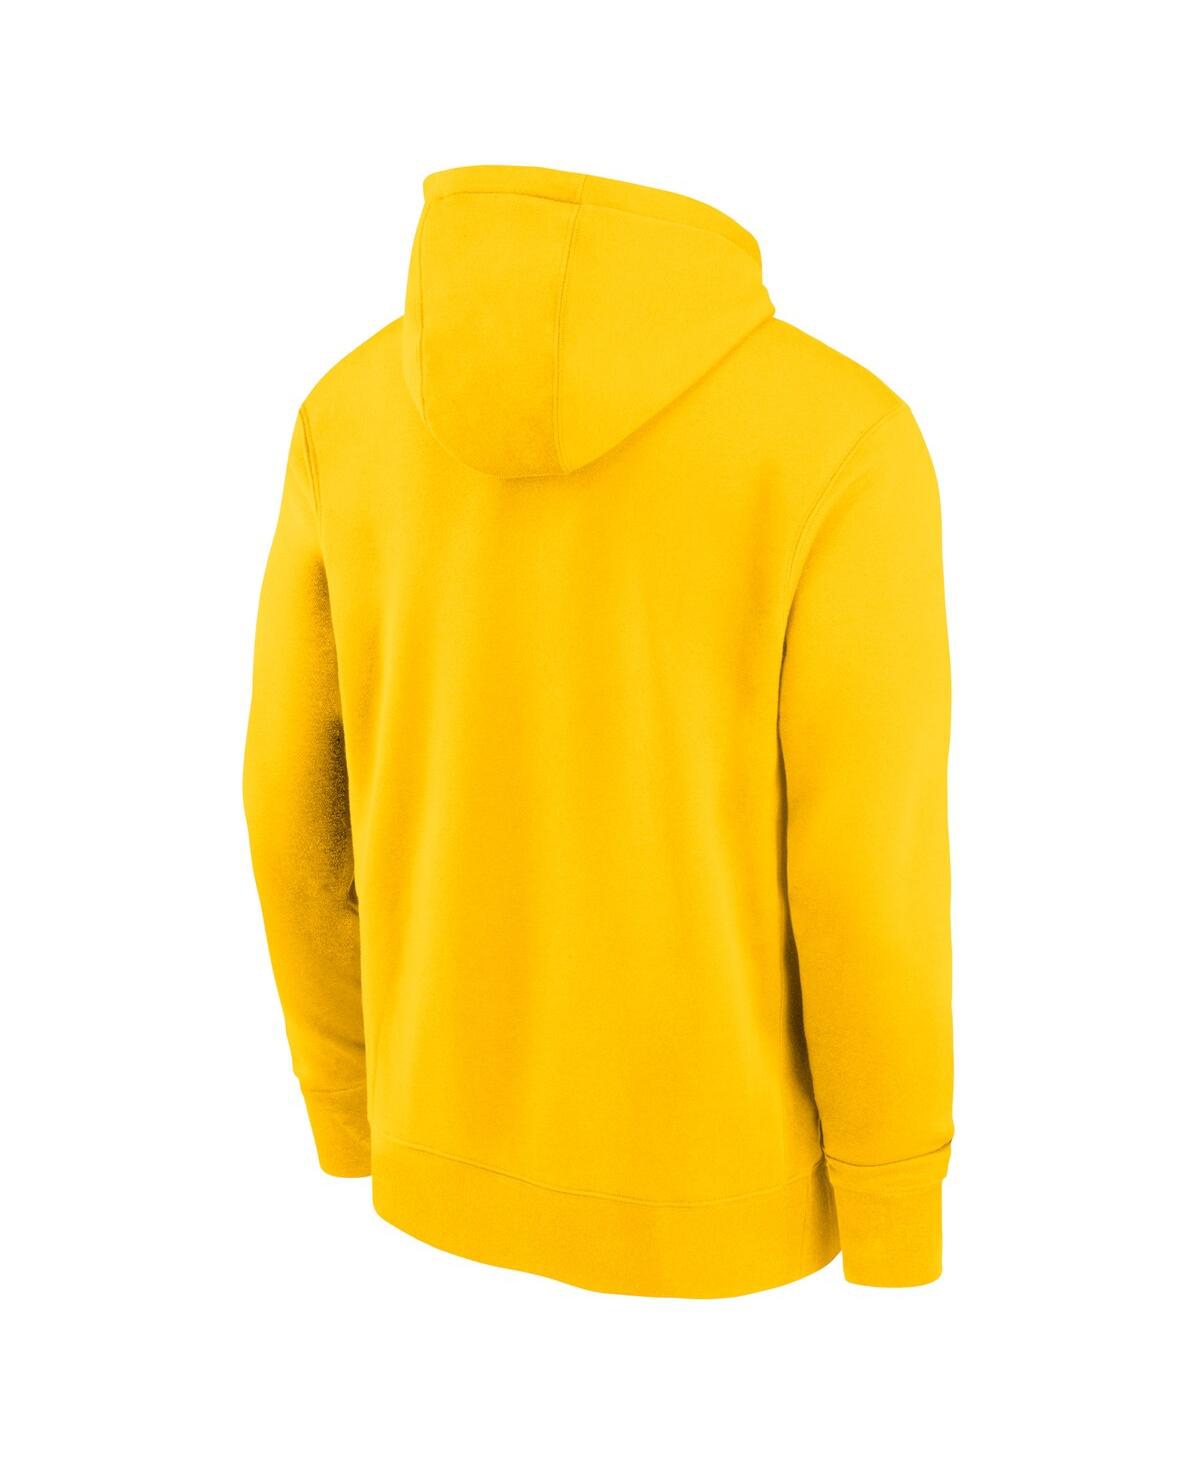 Shop Nike Men's  Yellow Barcelona Club Logo Pullover Hoodie